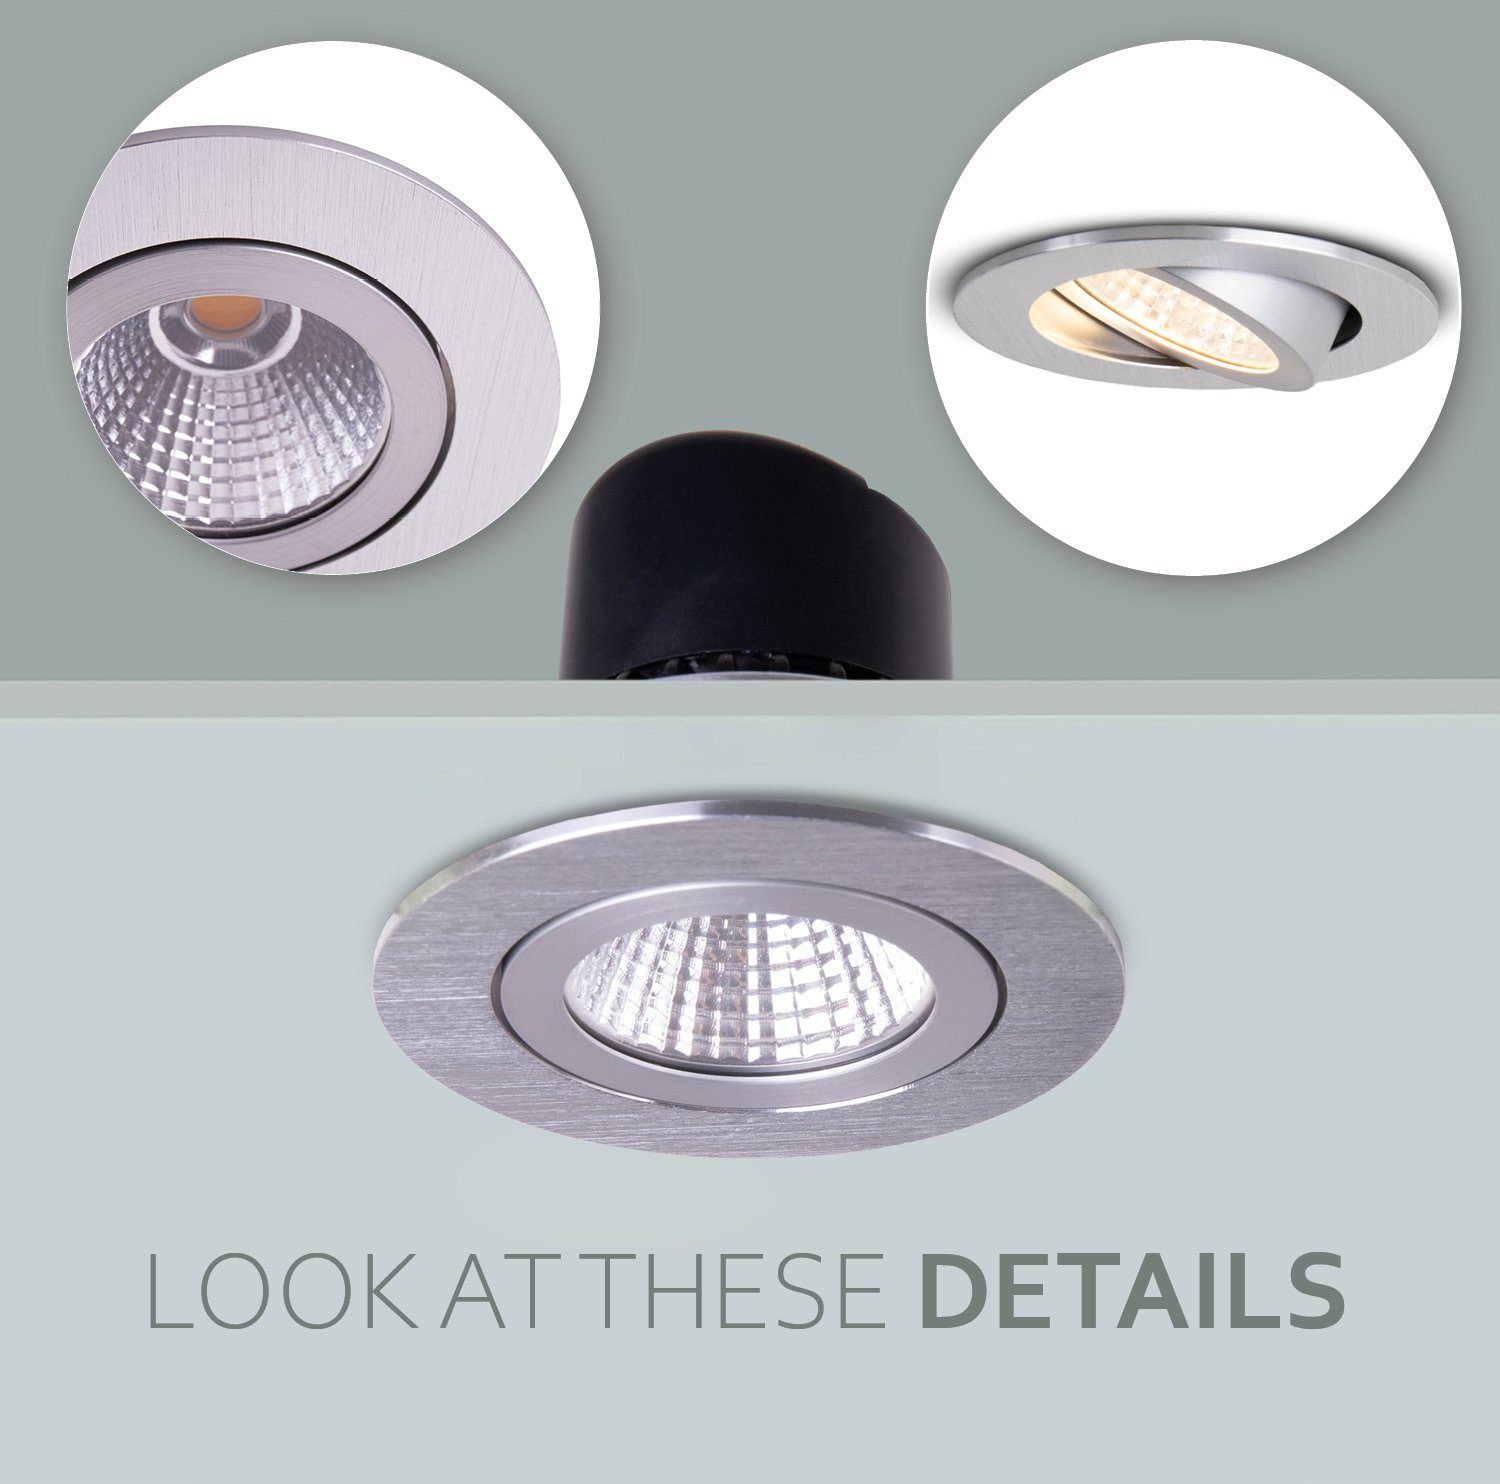 Paco LED LED Einbauleuchte Home wechselbar, Warmweiß, Flach Einbaustrahler dimmbar LED Spotlight Rita, Strahler Schwenkbar